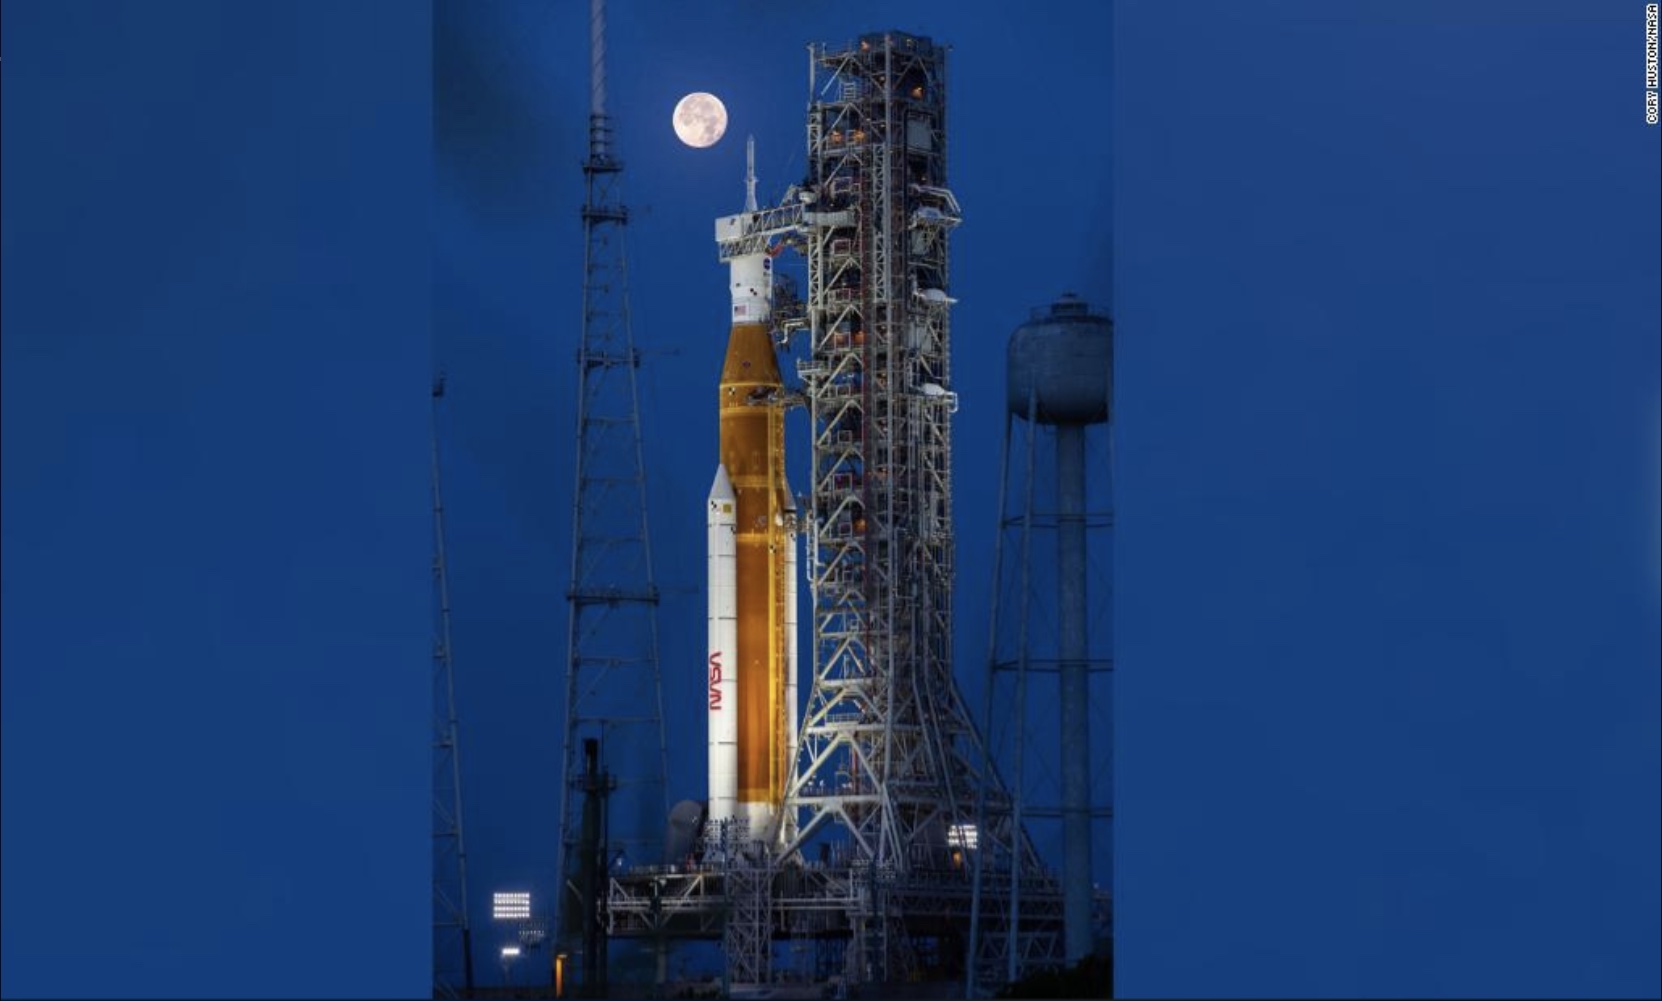 NASA’s mega moon rocket